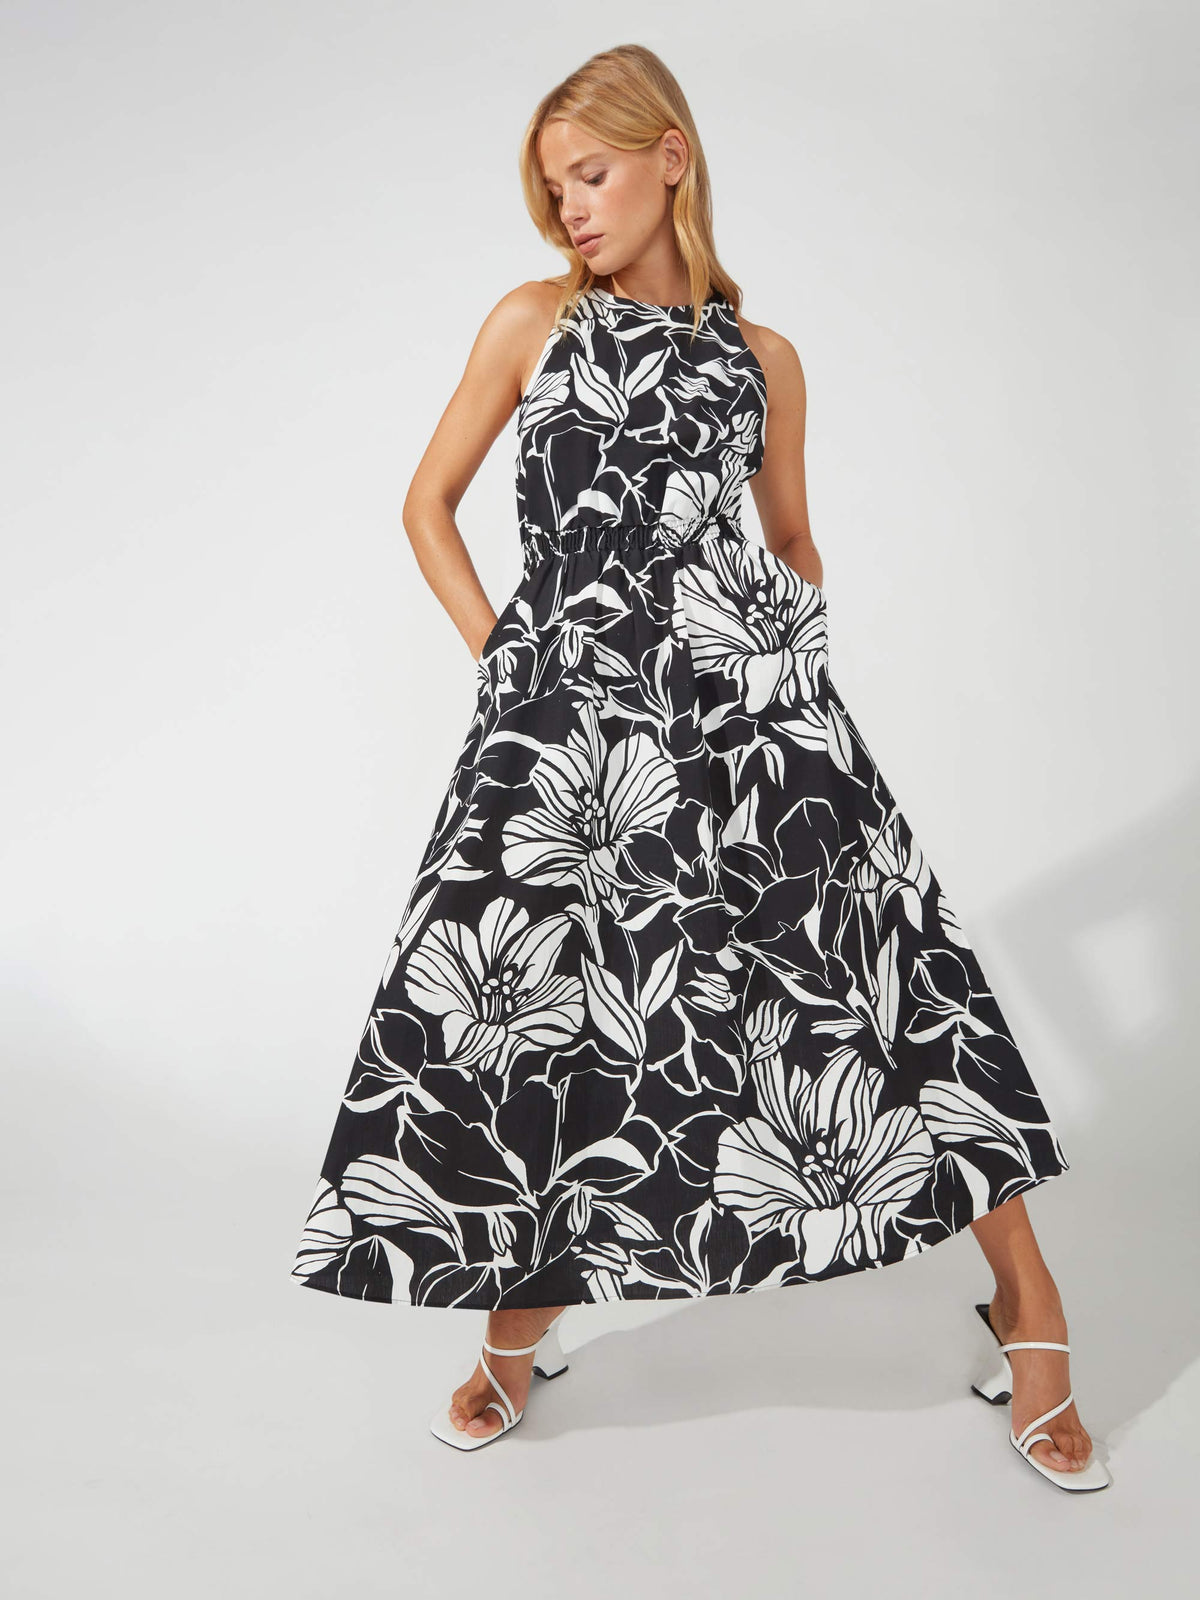 Black & White Floral Printed Dress